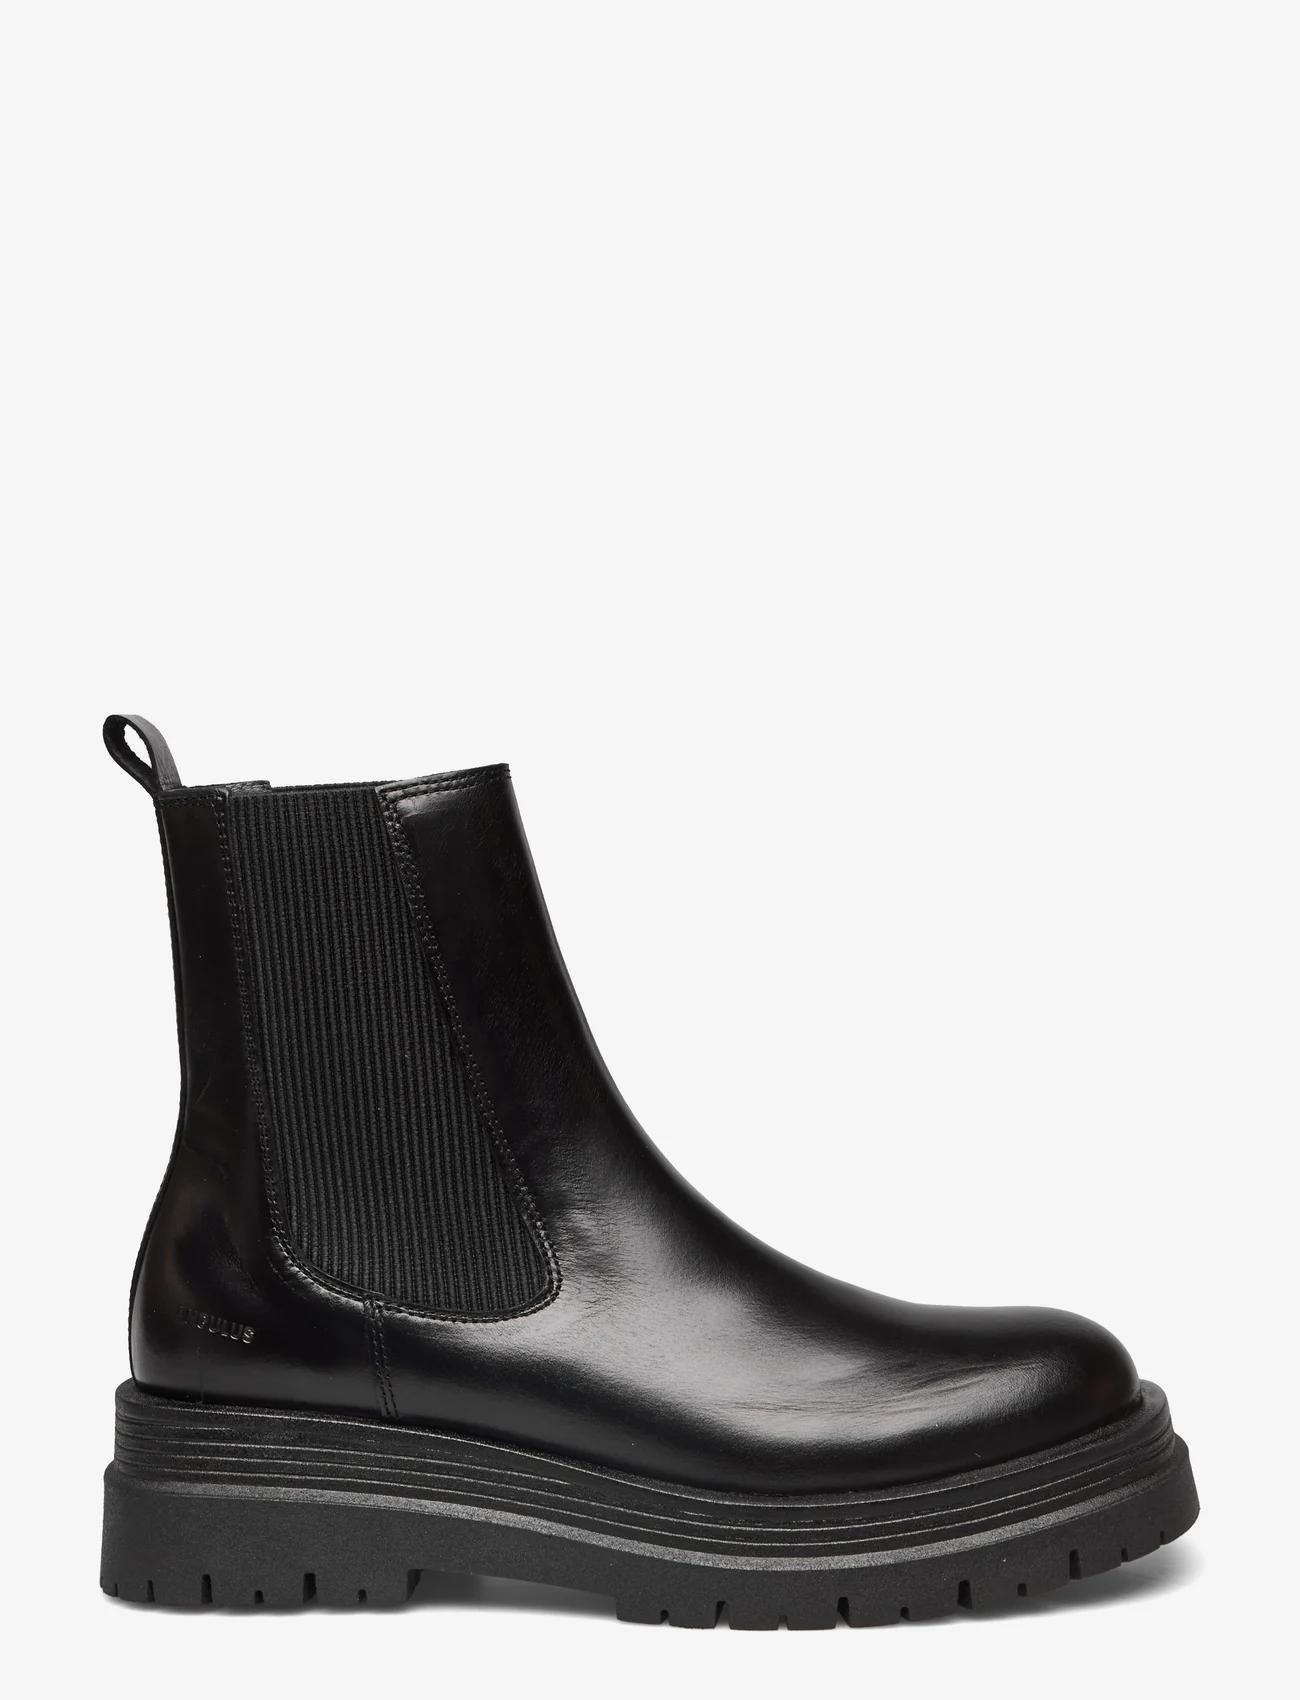 ANGULUS - Boots - flat - chelsea stila zābaki - 1835/019 black /black - 1